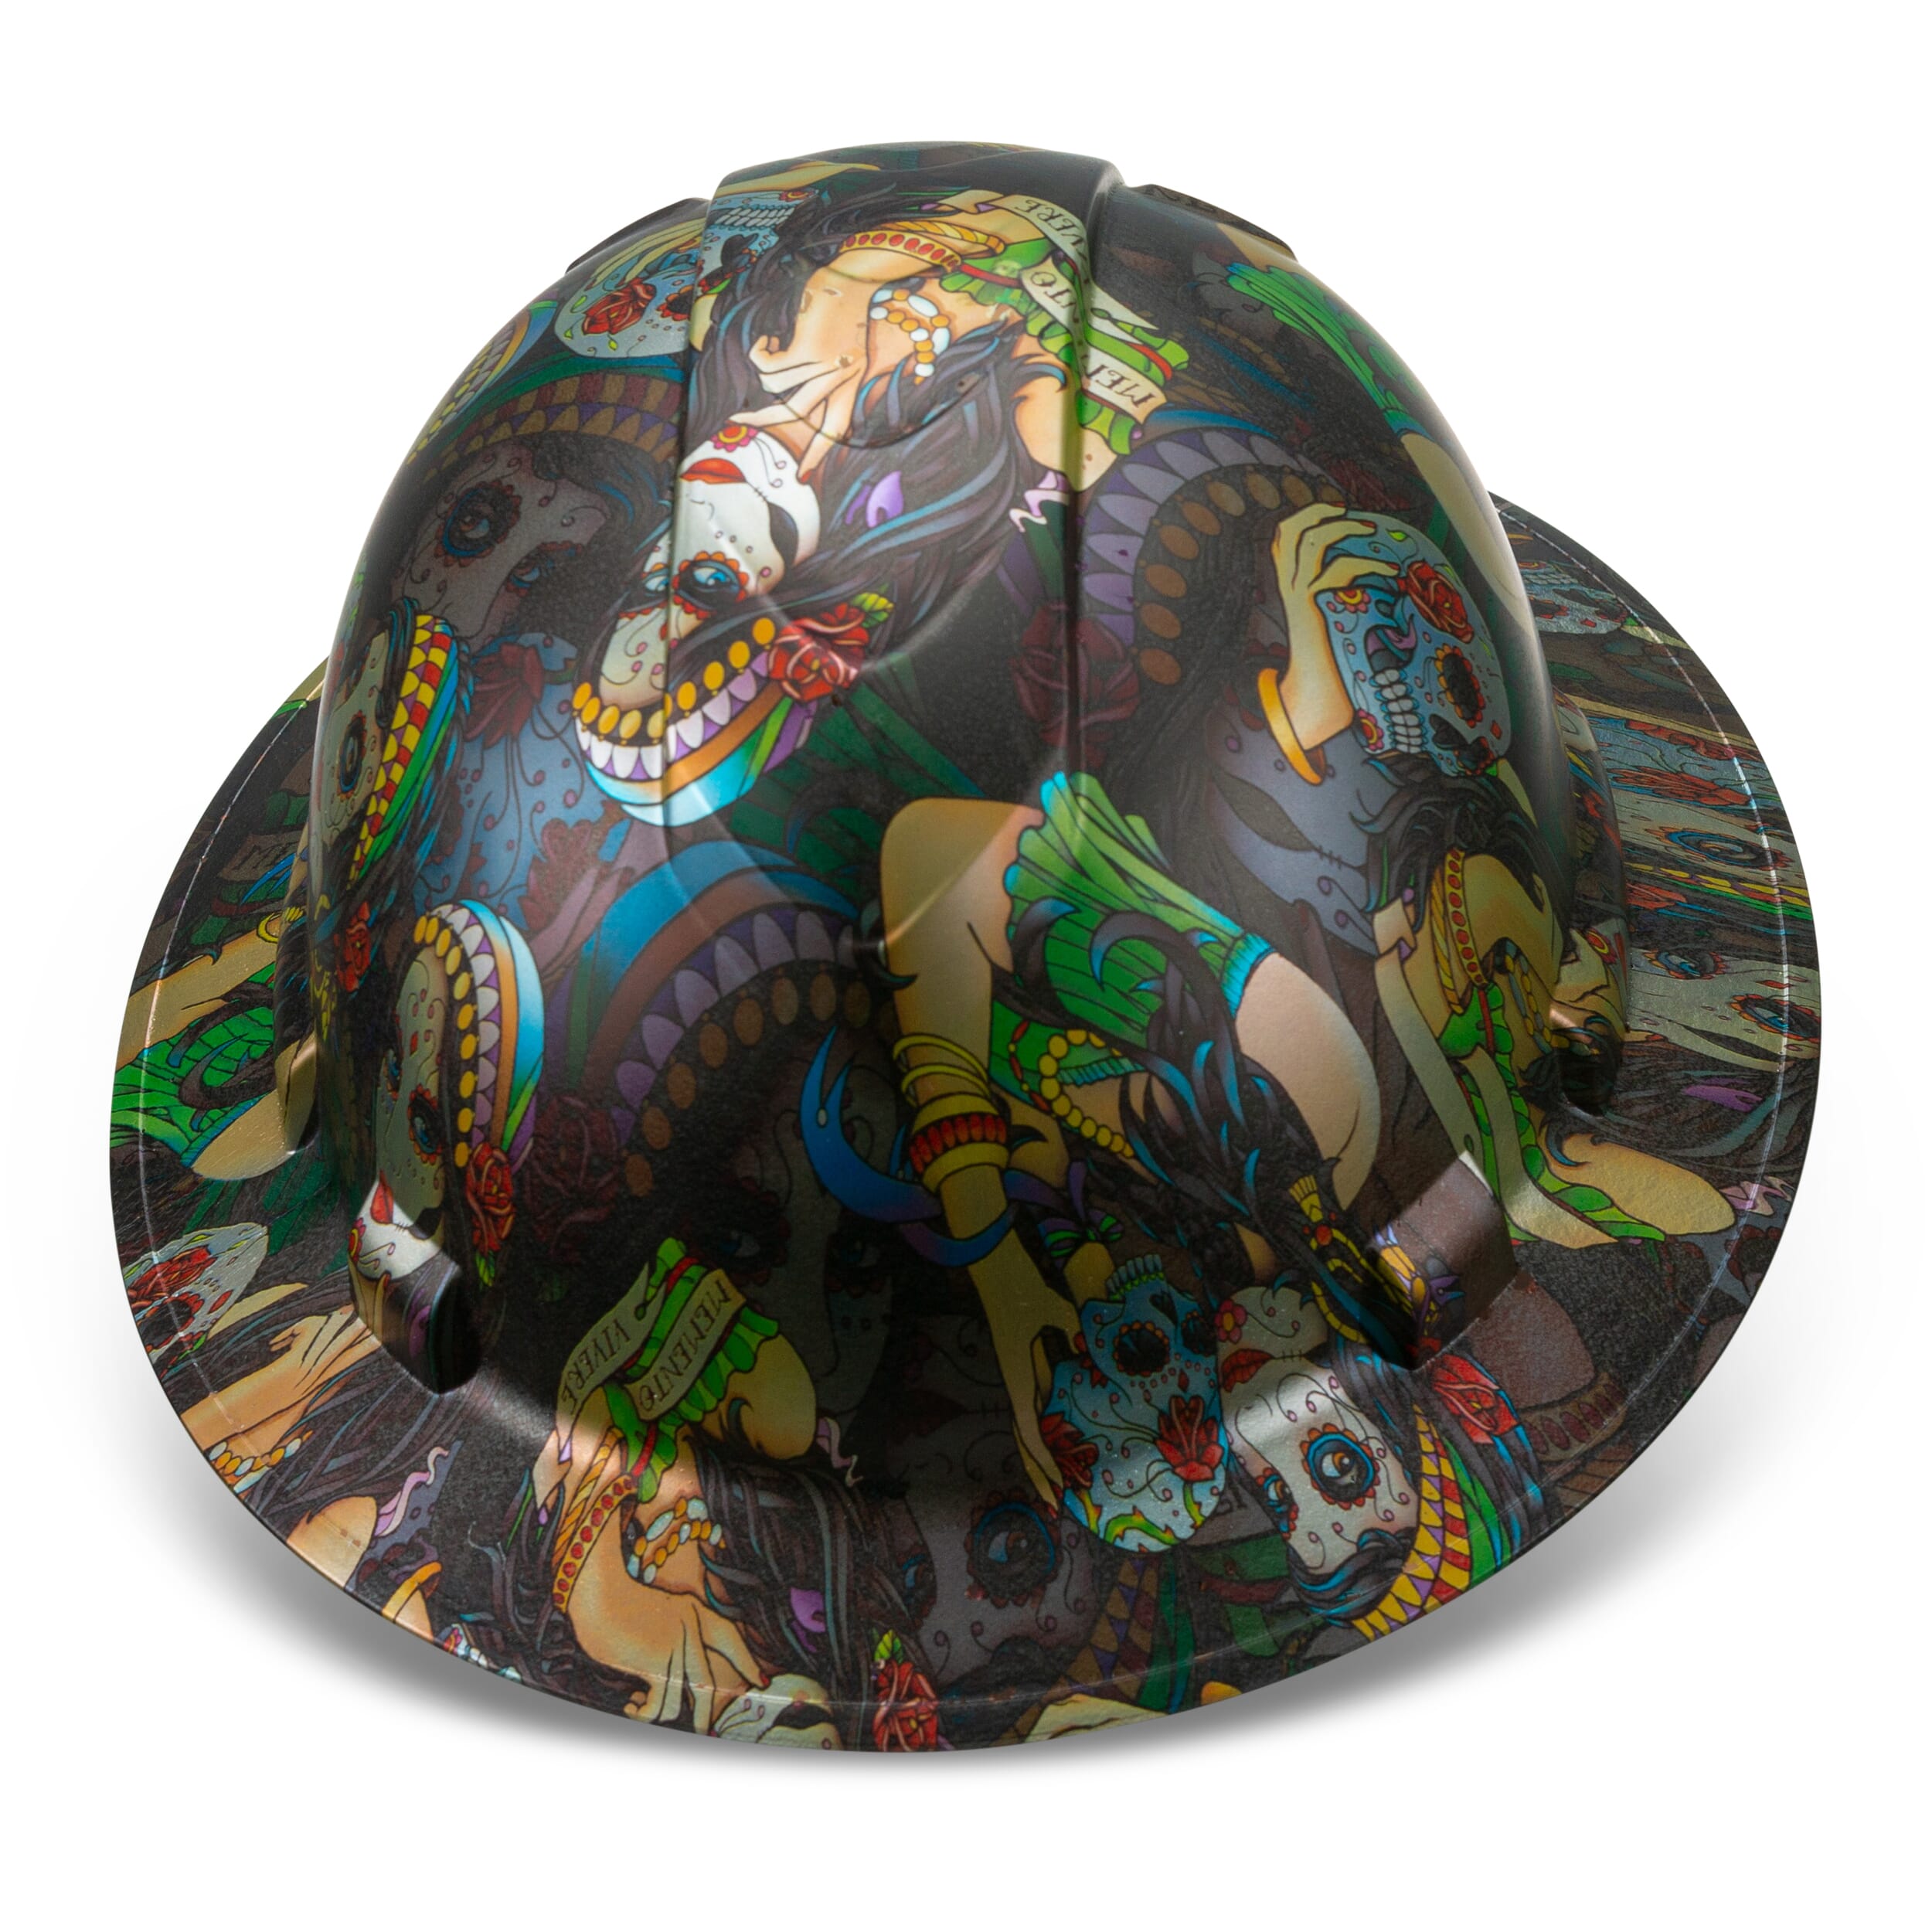 Full Brim Pyramex Hard Hat, Custom SeÃ±orita Muerte Design, Safety Helmet, 6 Point